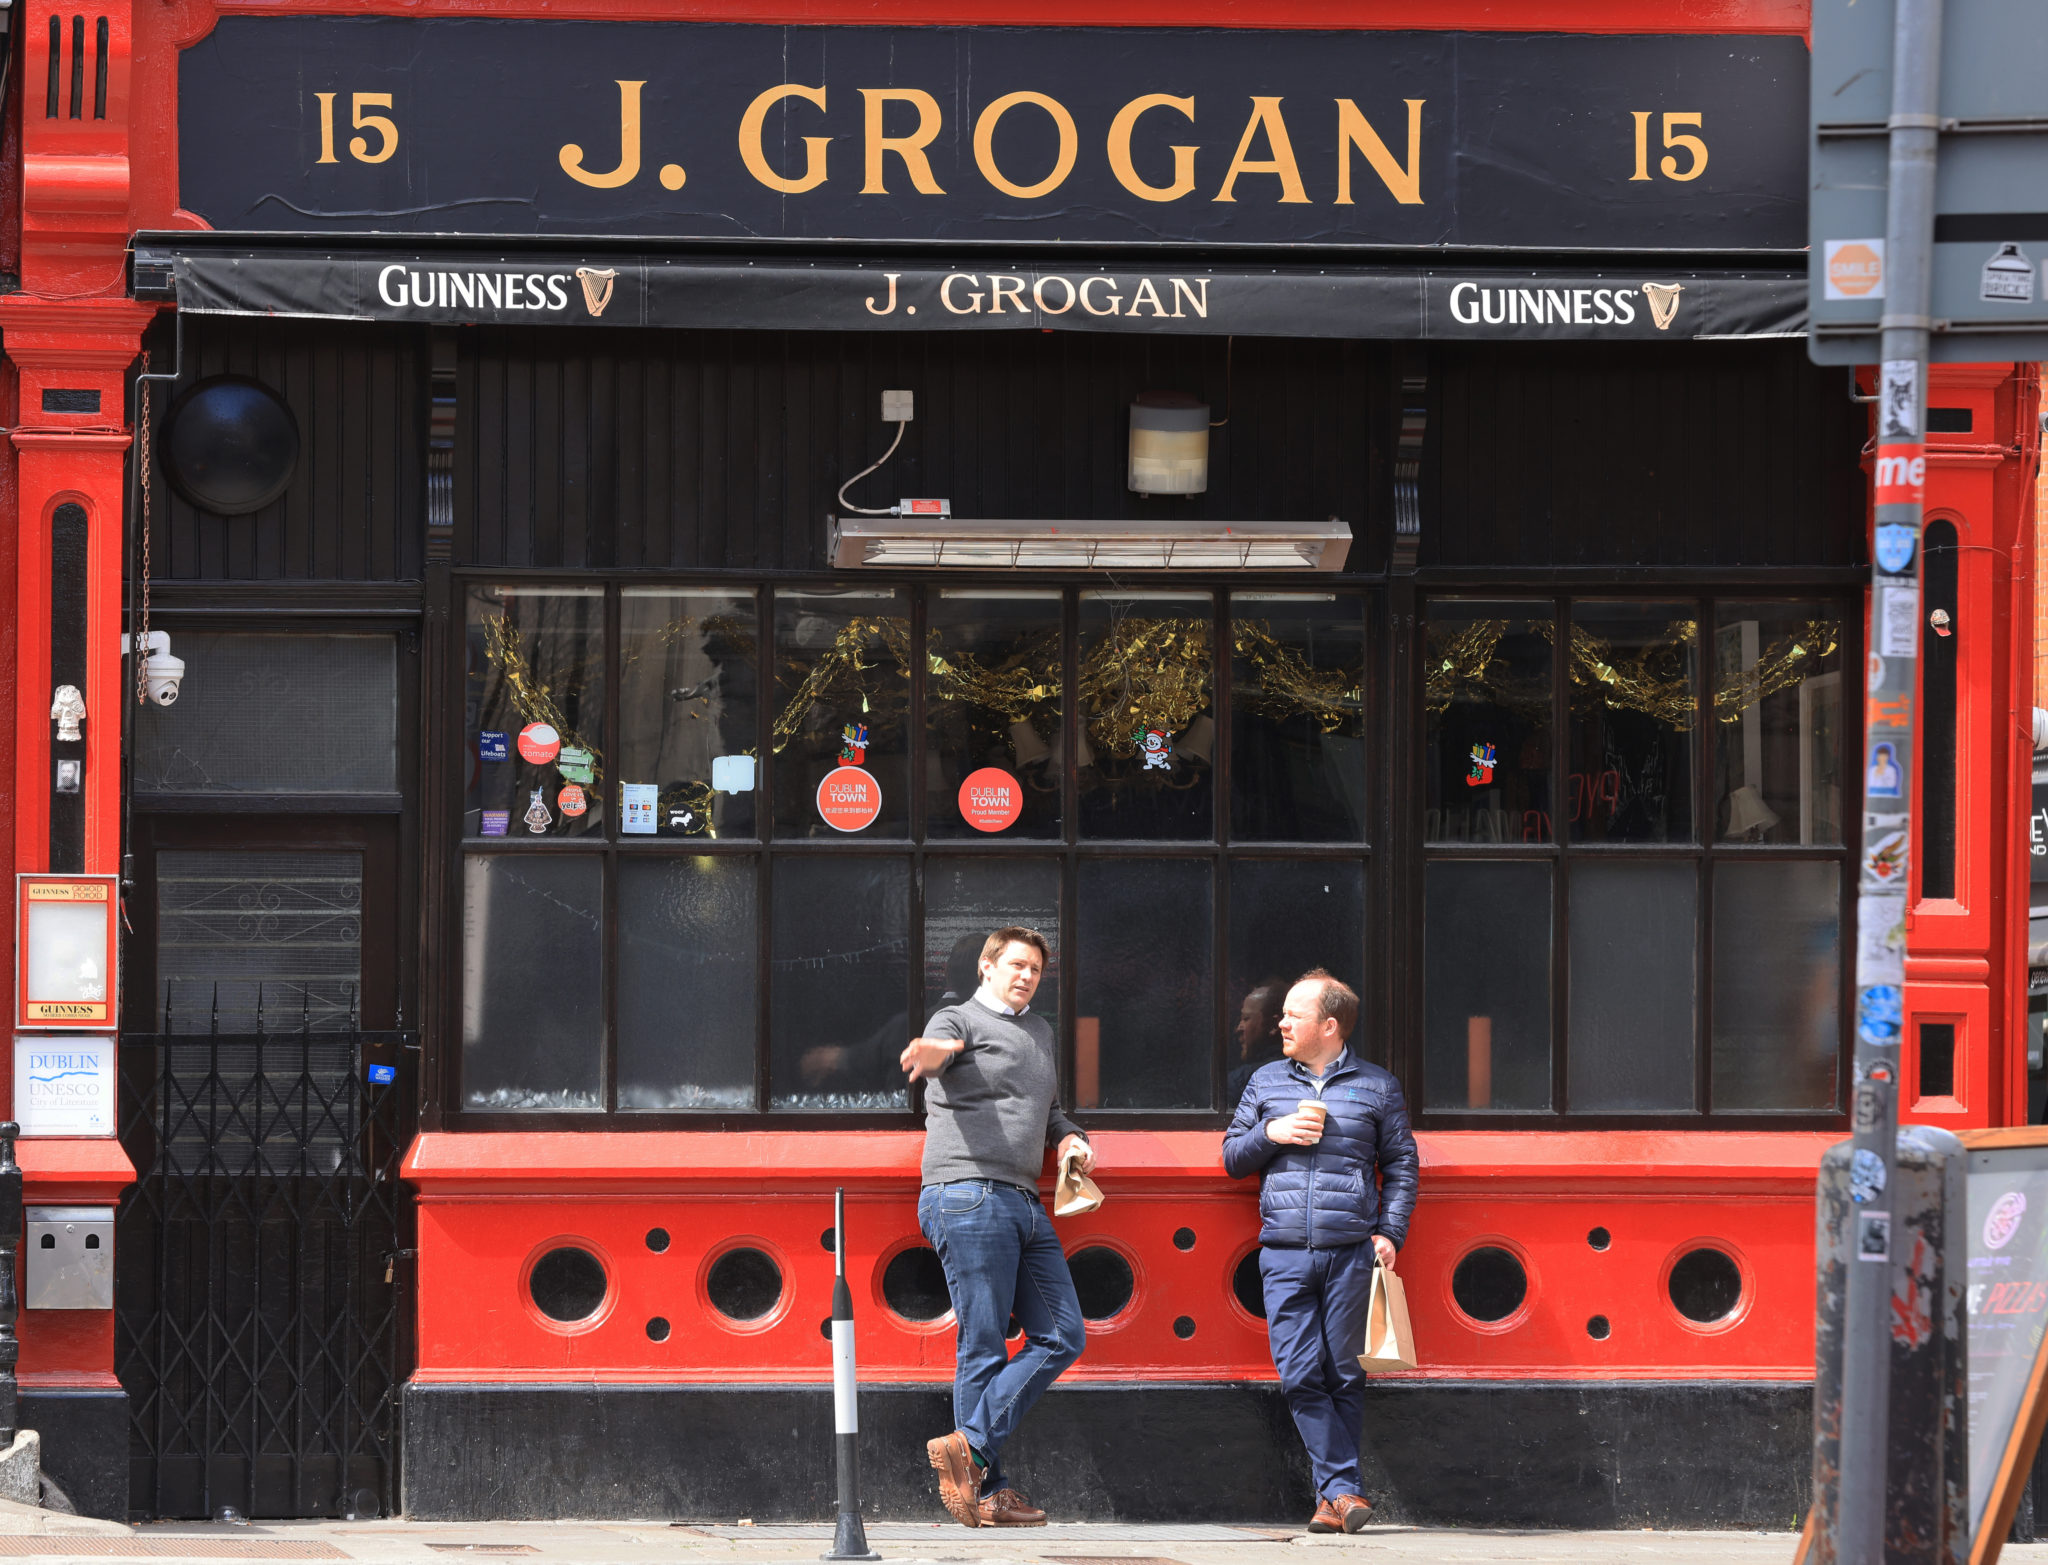 Grogans pub on South William Street in Dublin